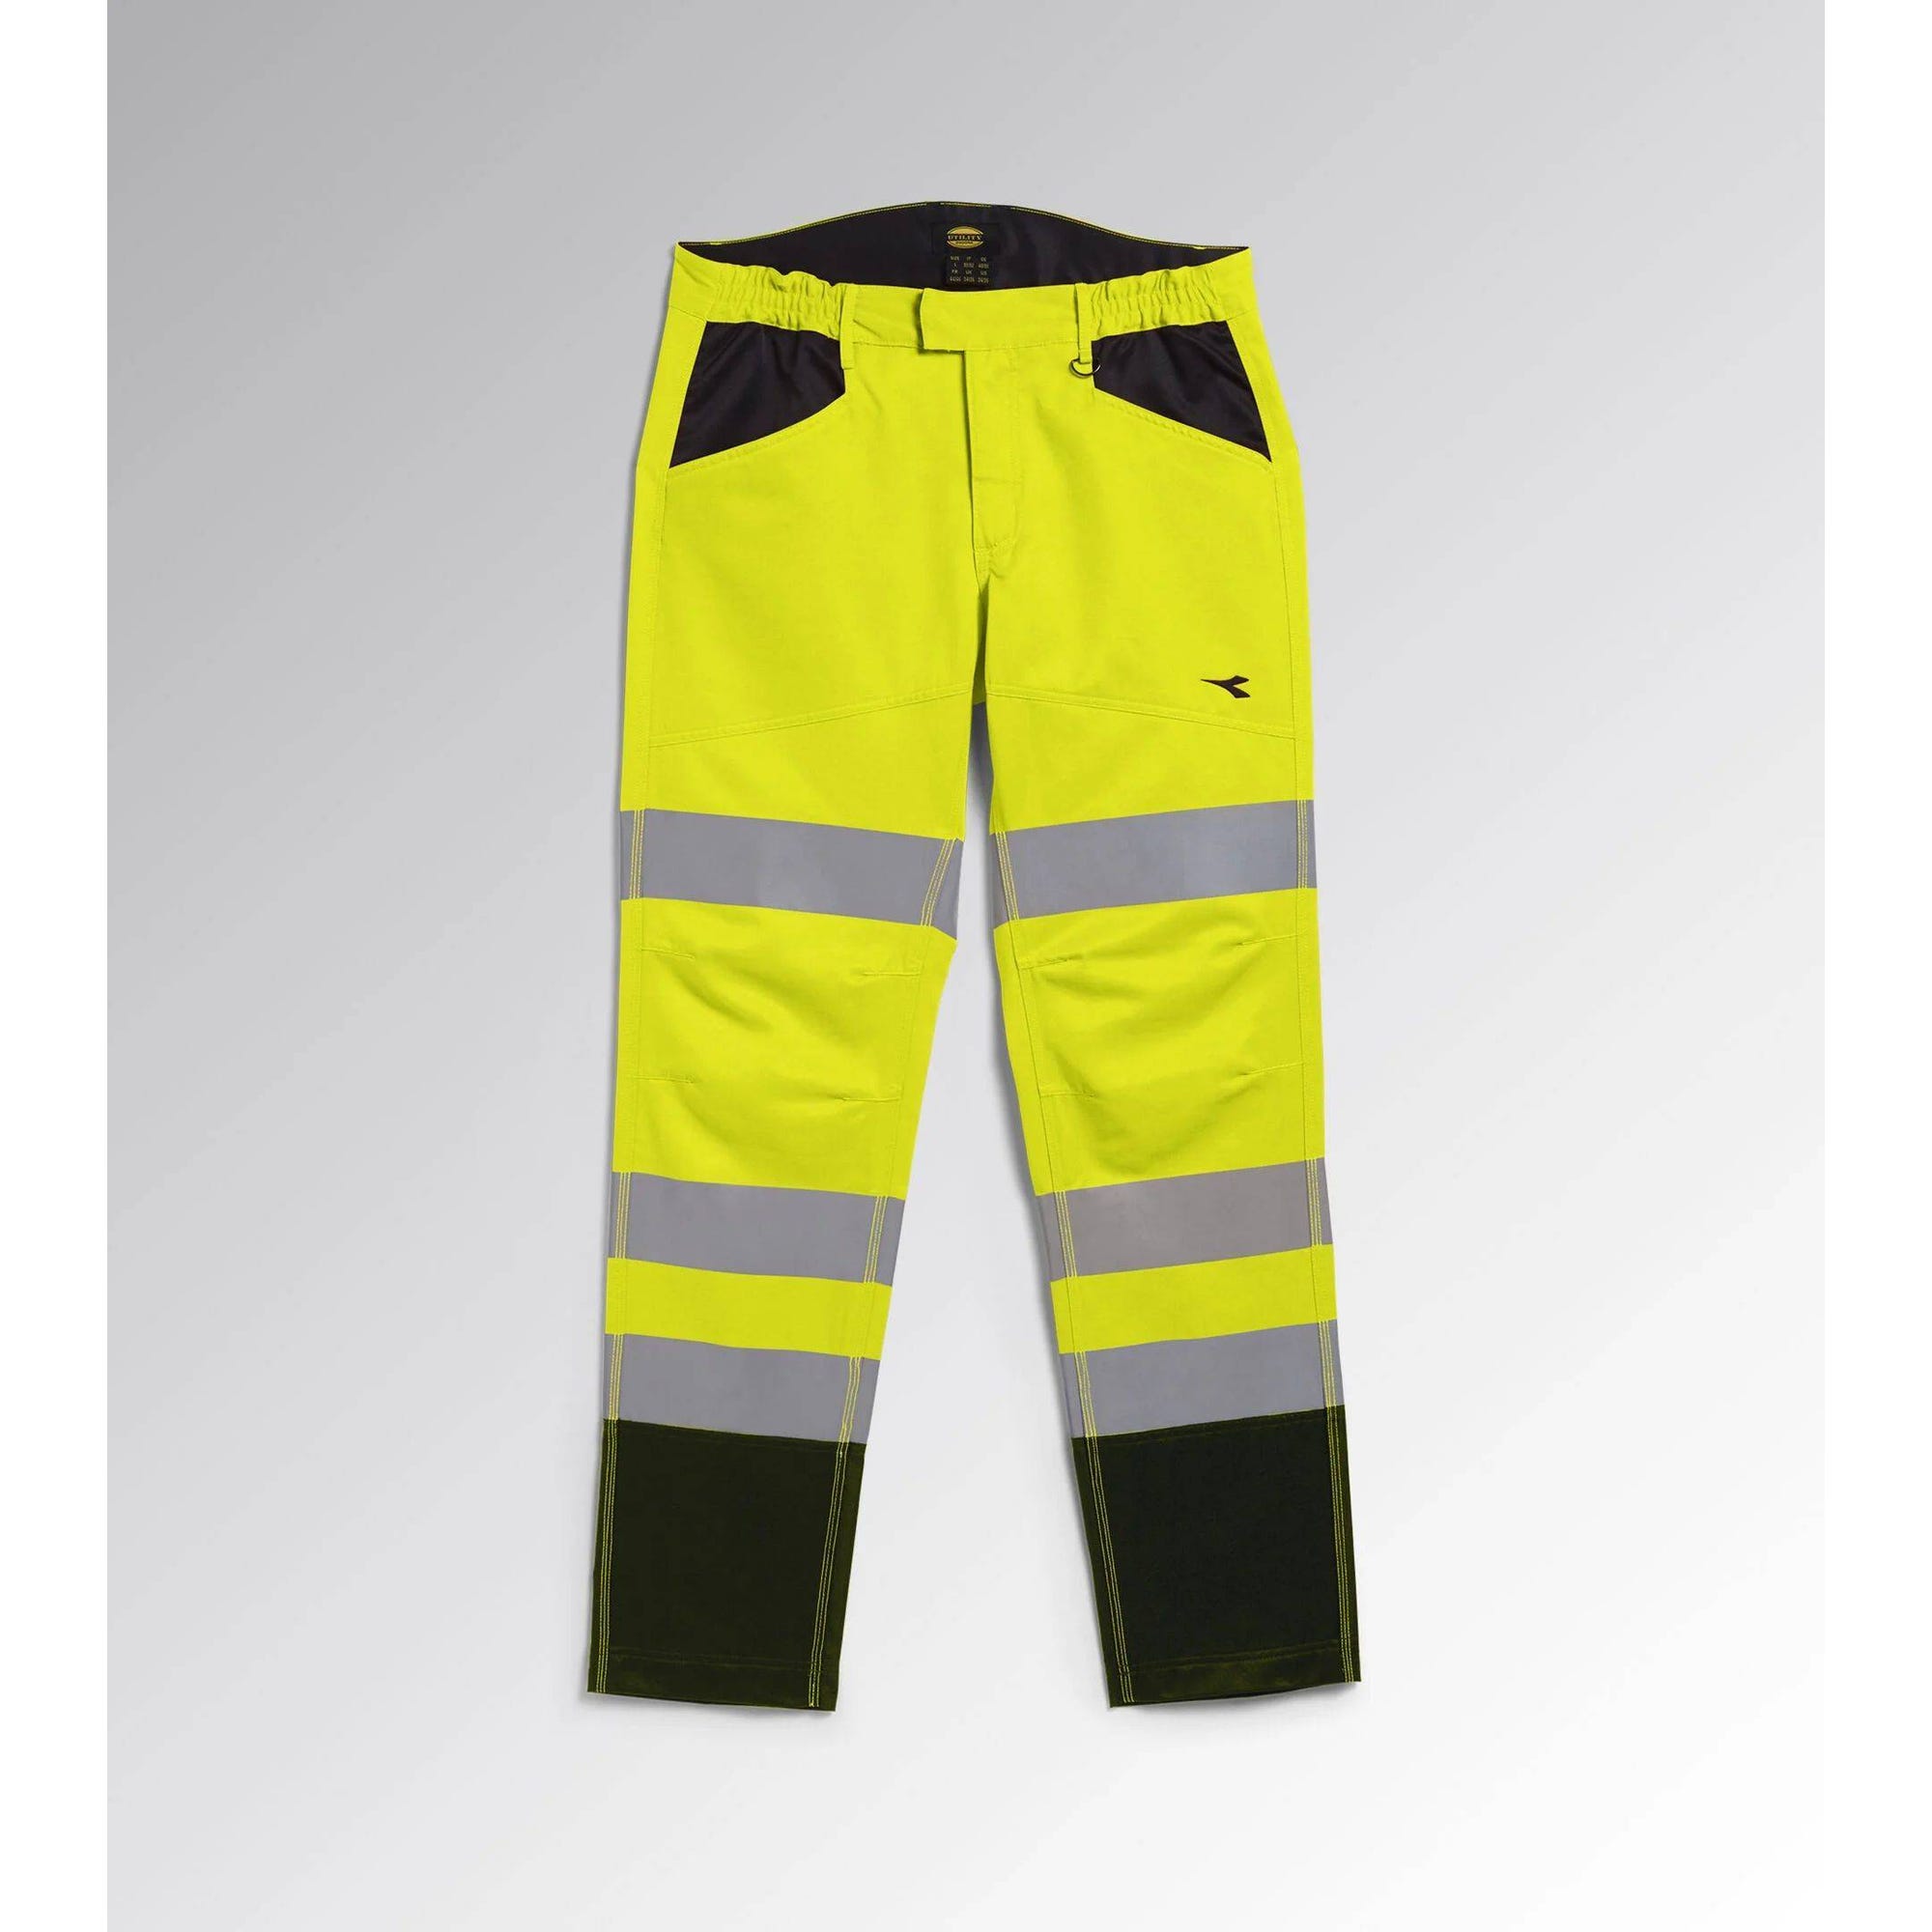 Pantalon de travail haute visibilité Diadora EN 20471:2013 2 Orange Fluo XL 5